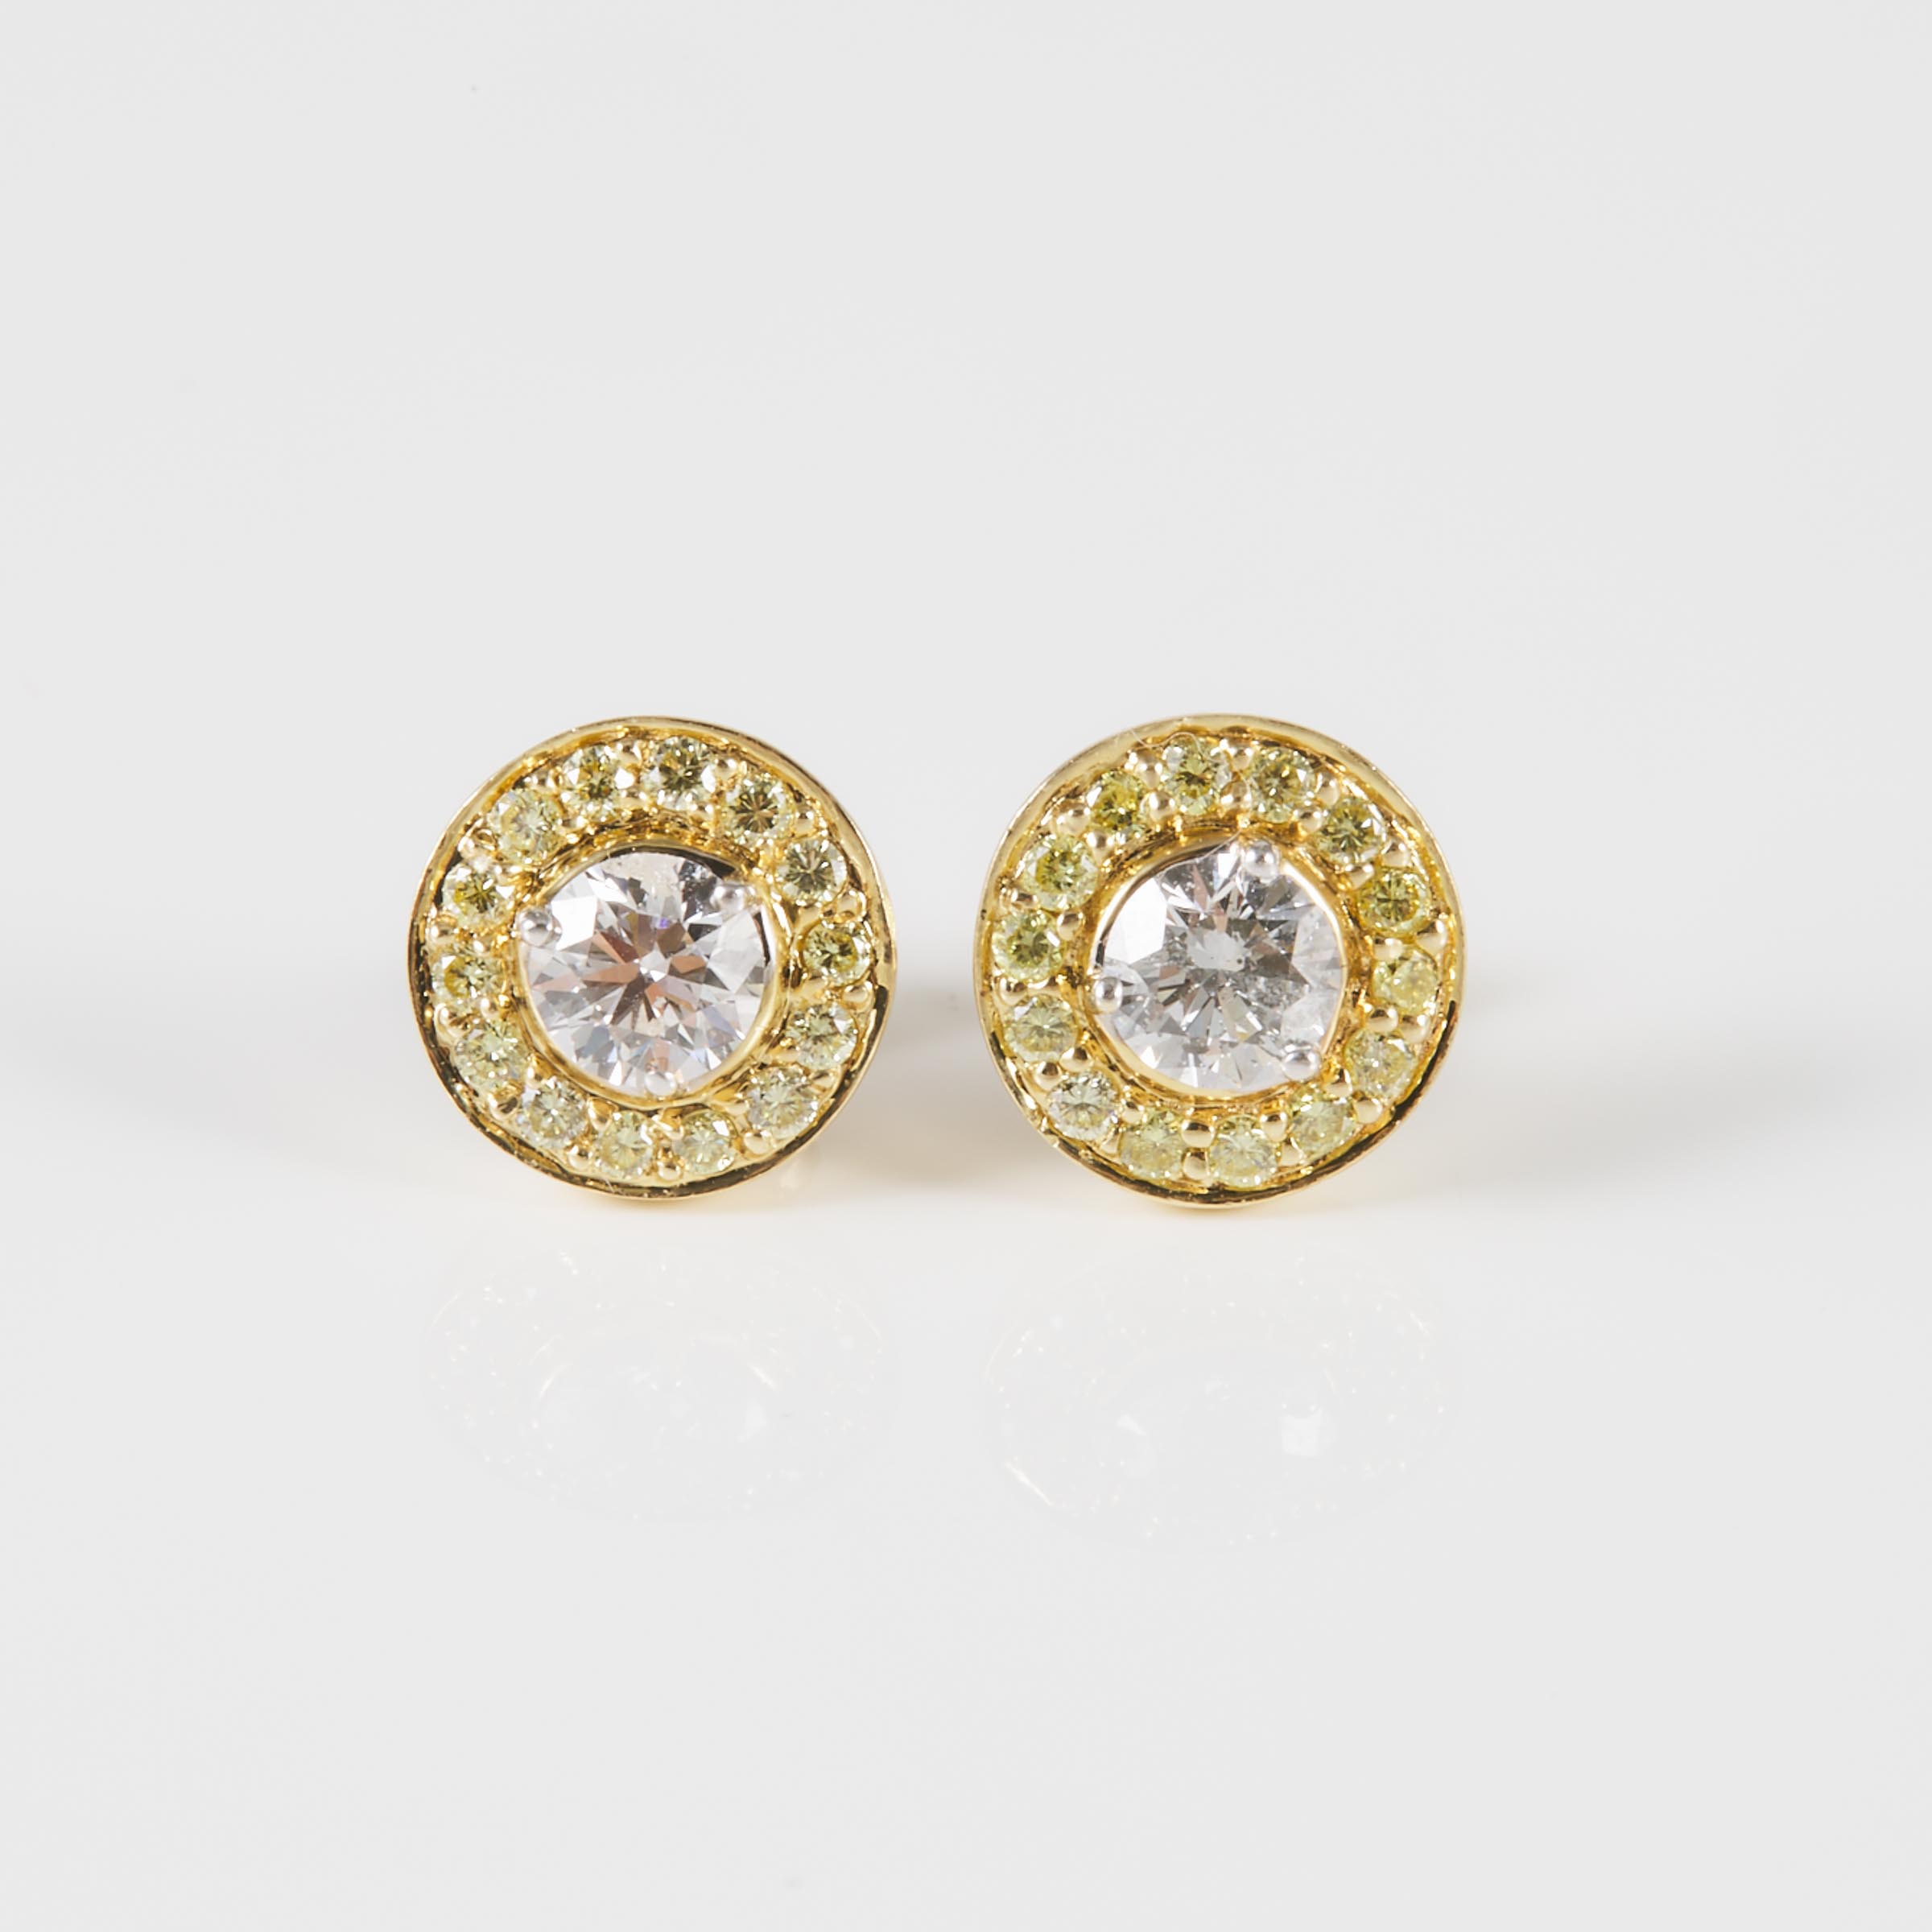 Pair Of 14k Yellow Gold Stud Earings